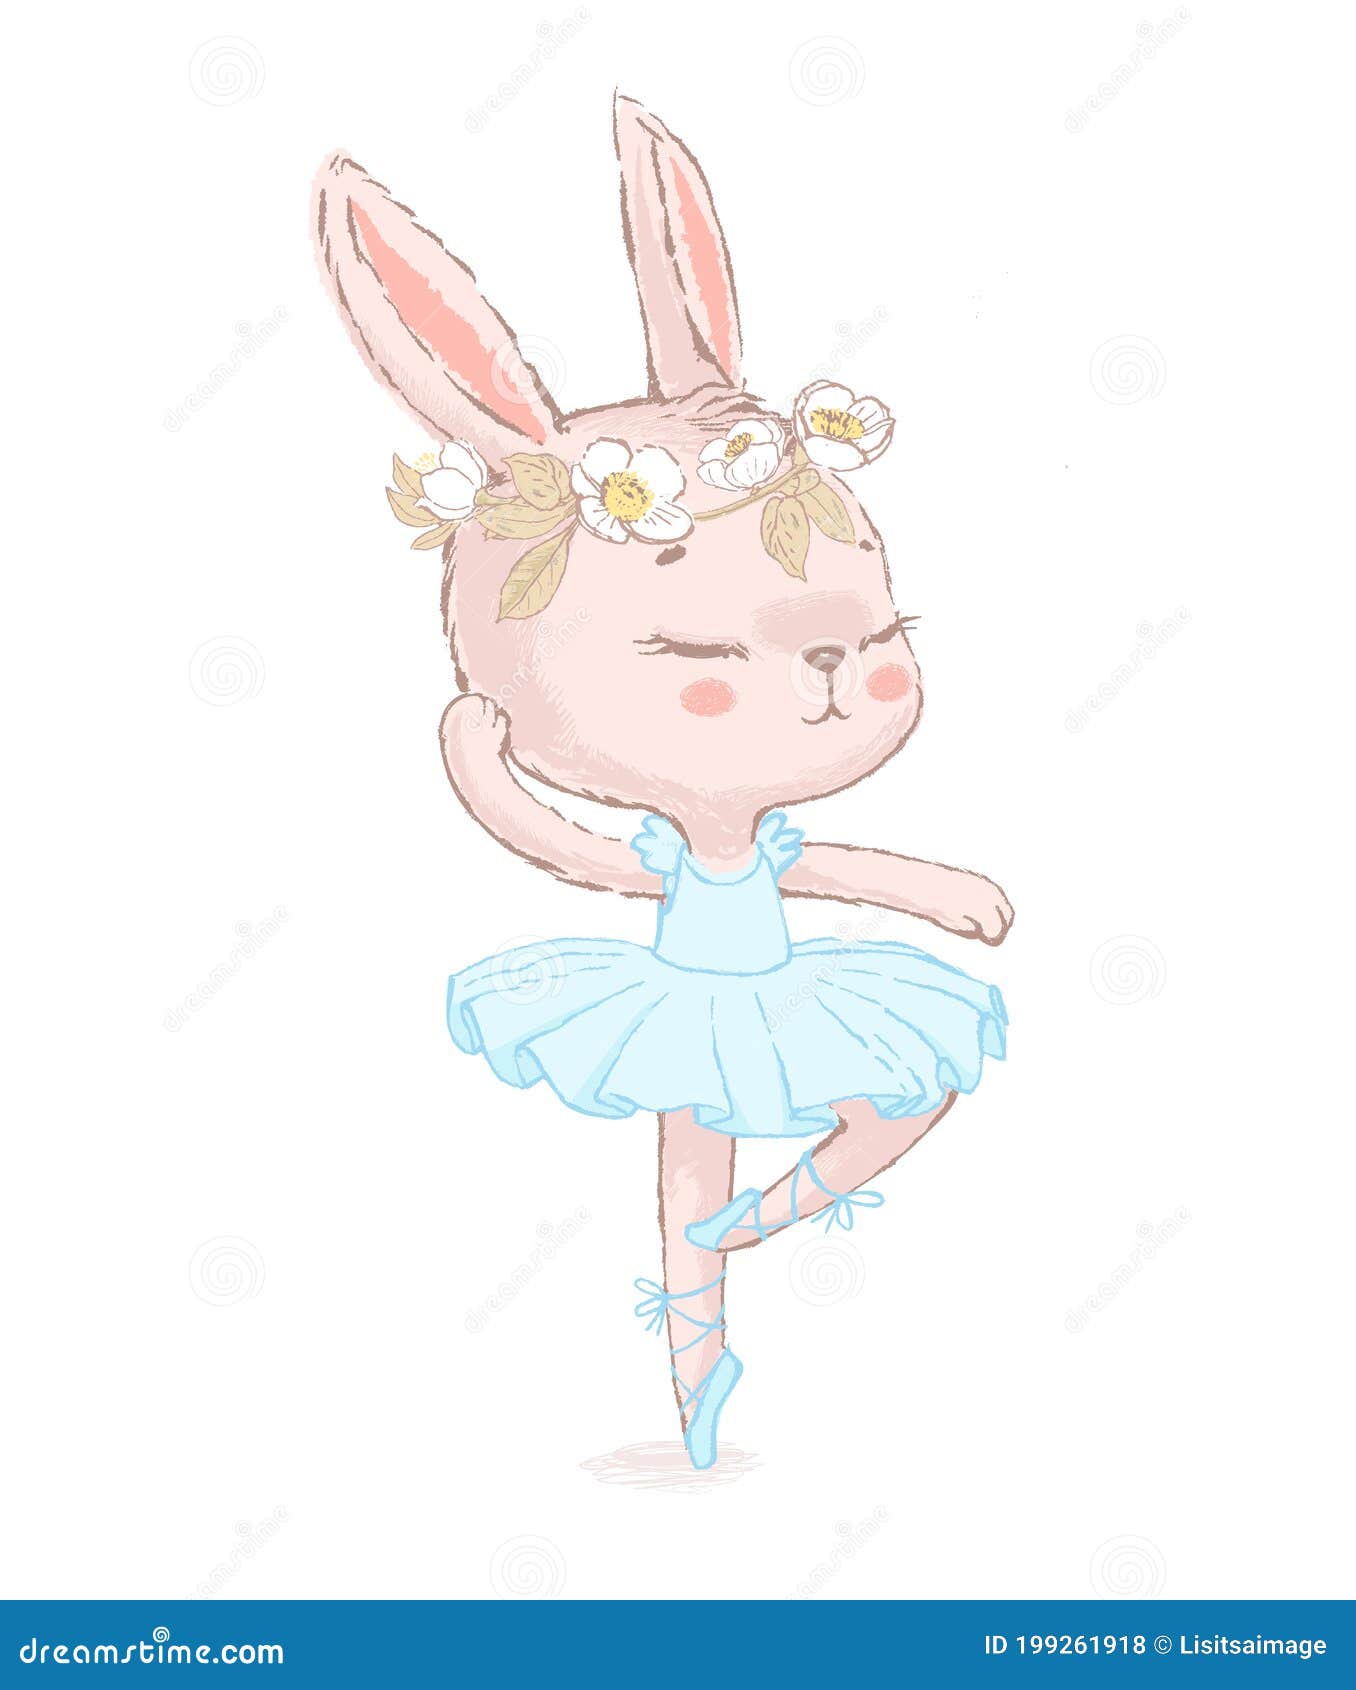 sweet dancing ballerina bunny . dancilg little rabbit wearing blue tutu ans wreath. can be used for t-shirt